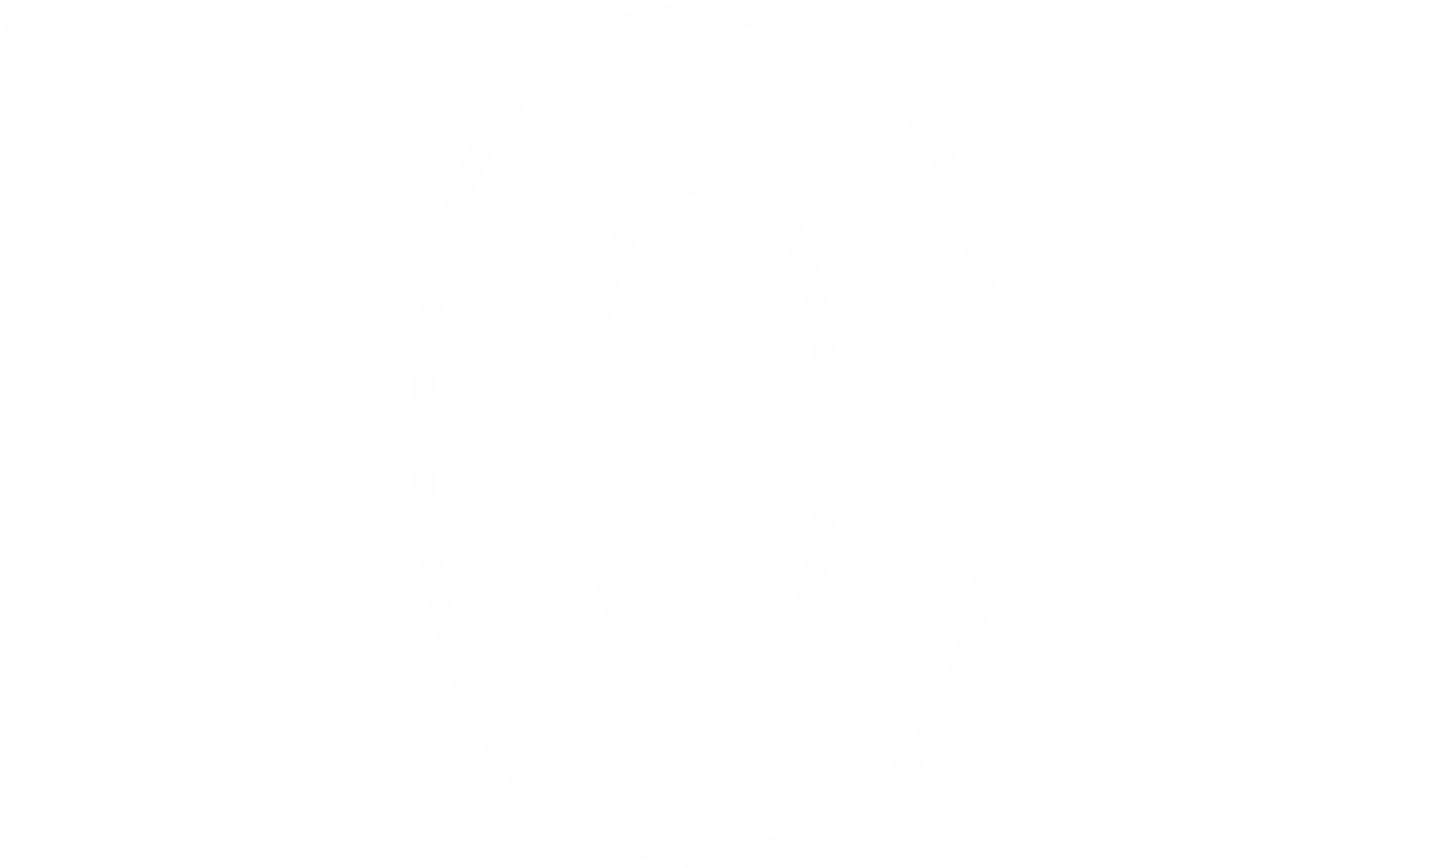 SOUND HOLIC 10th Anniversary